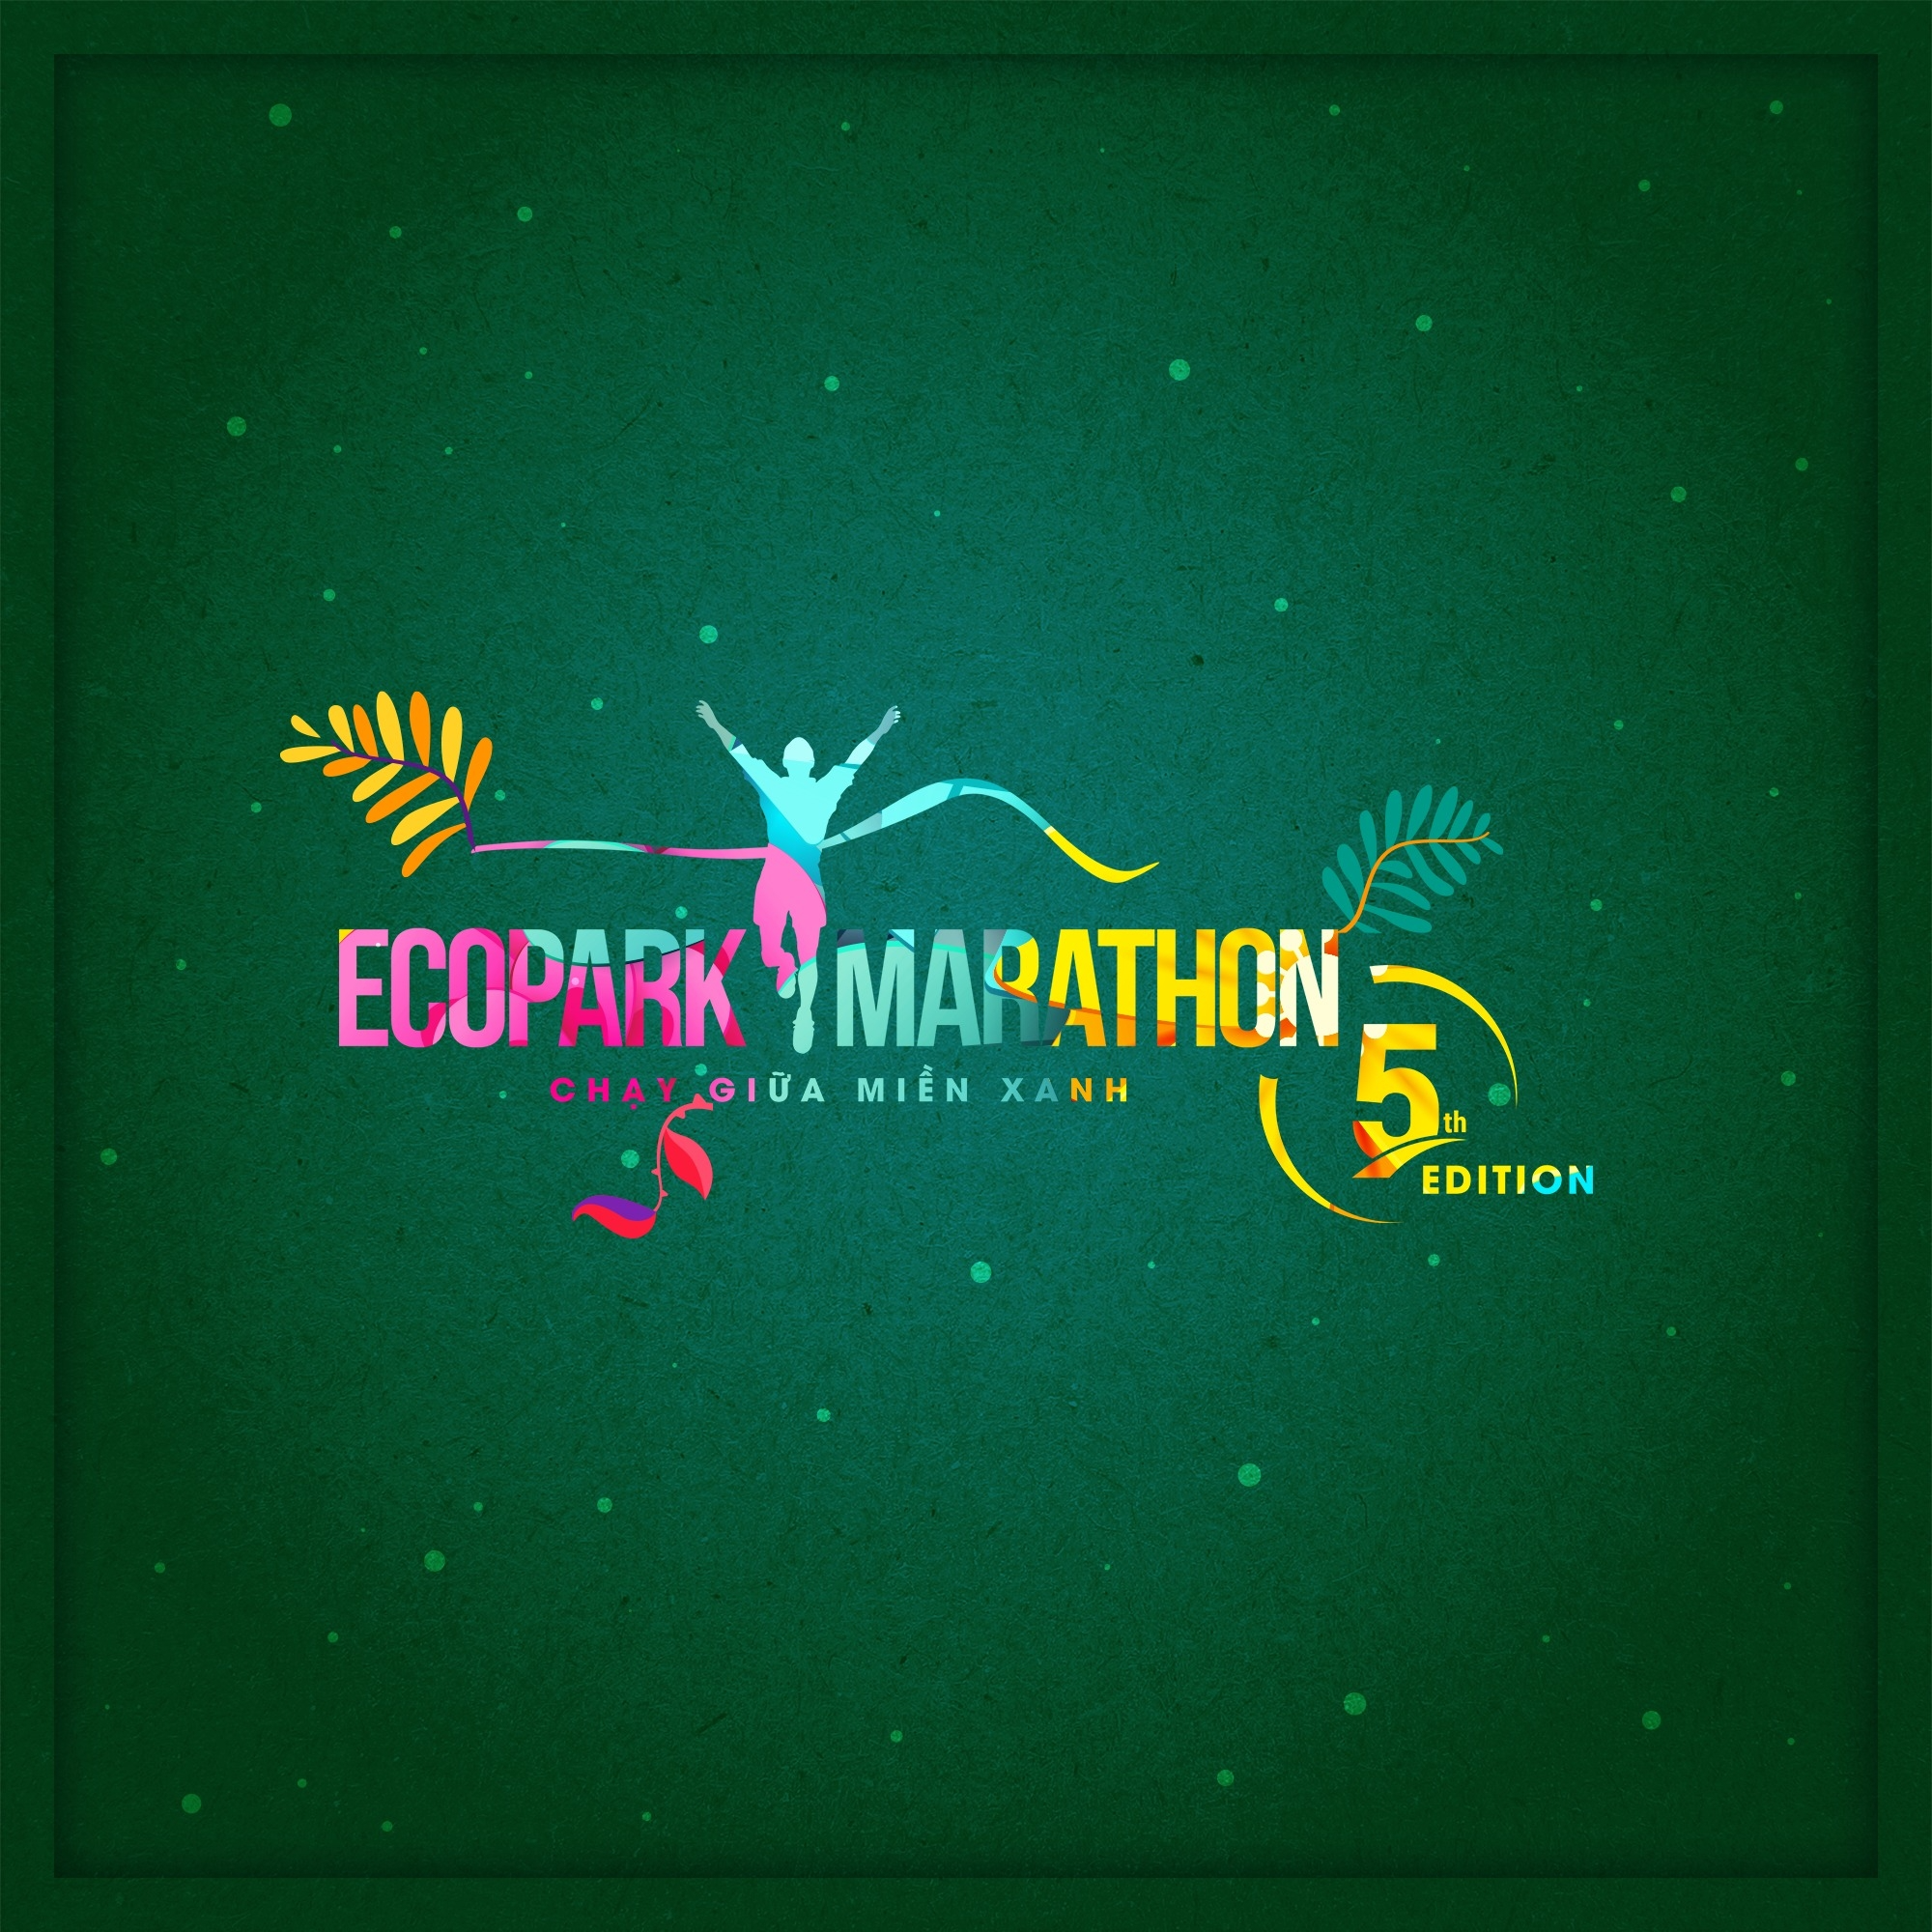 Ecopark Marathon